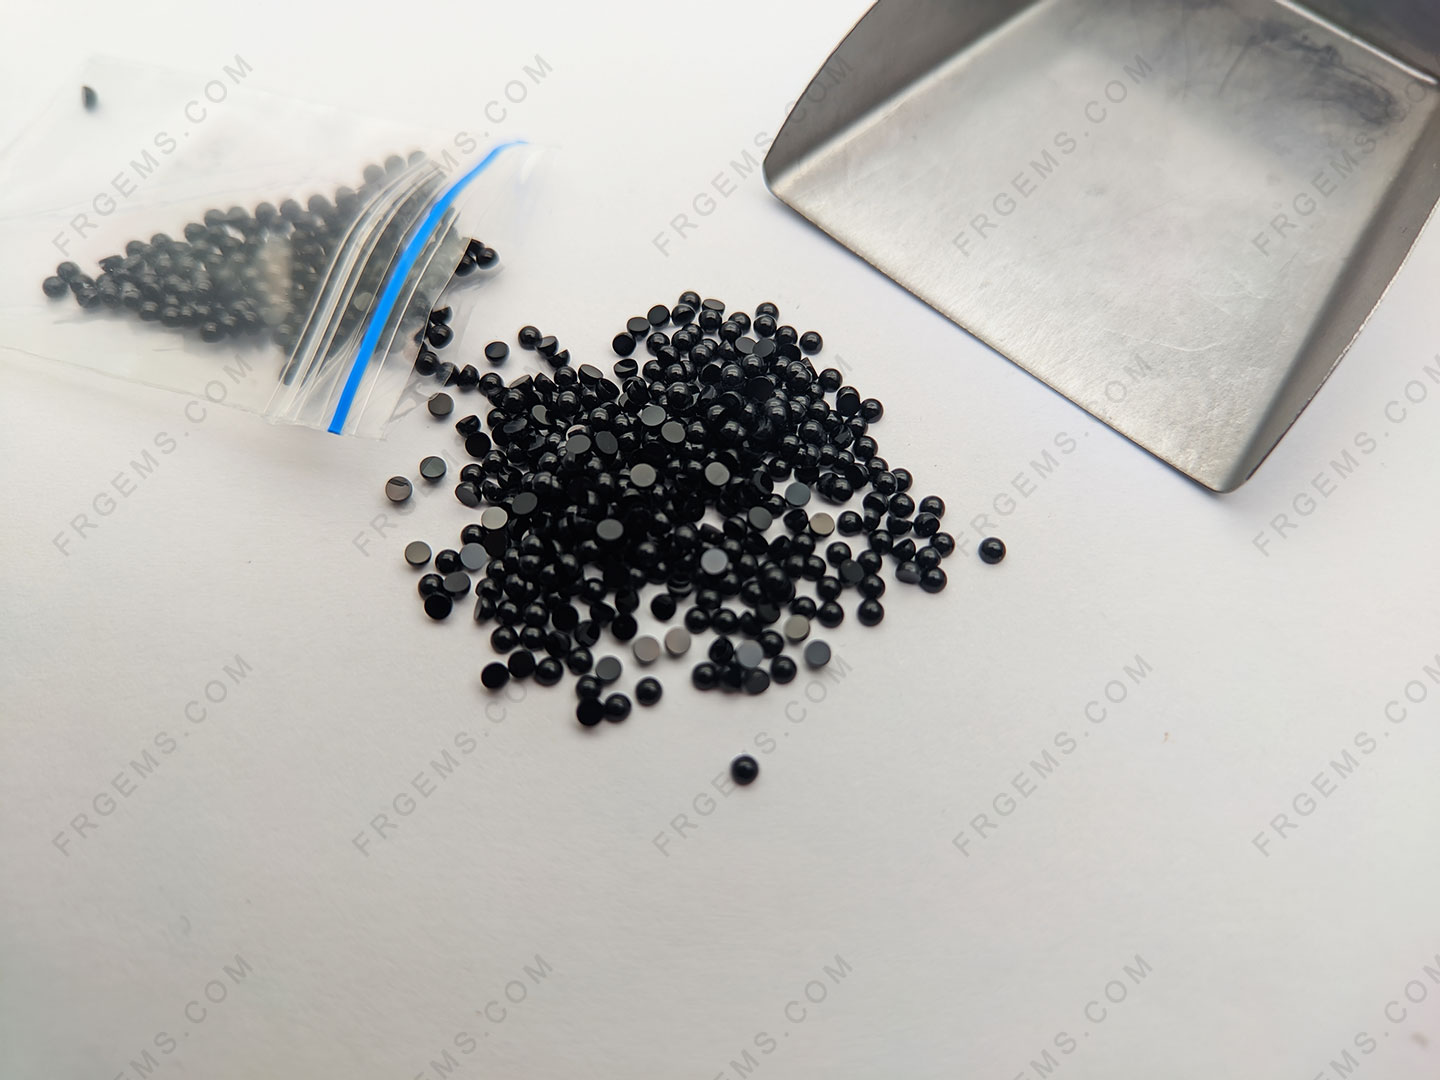 Buy Genuine Natural Black Onyx Round Shaped Cabochon 2mm Loose Gemstones